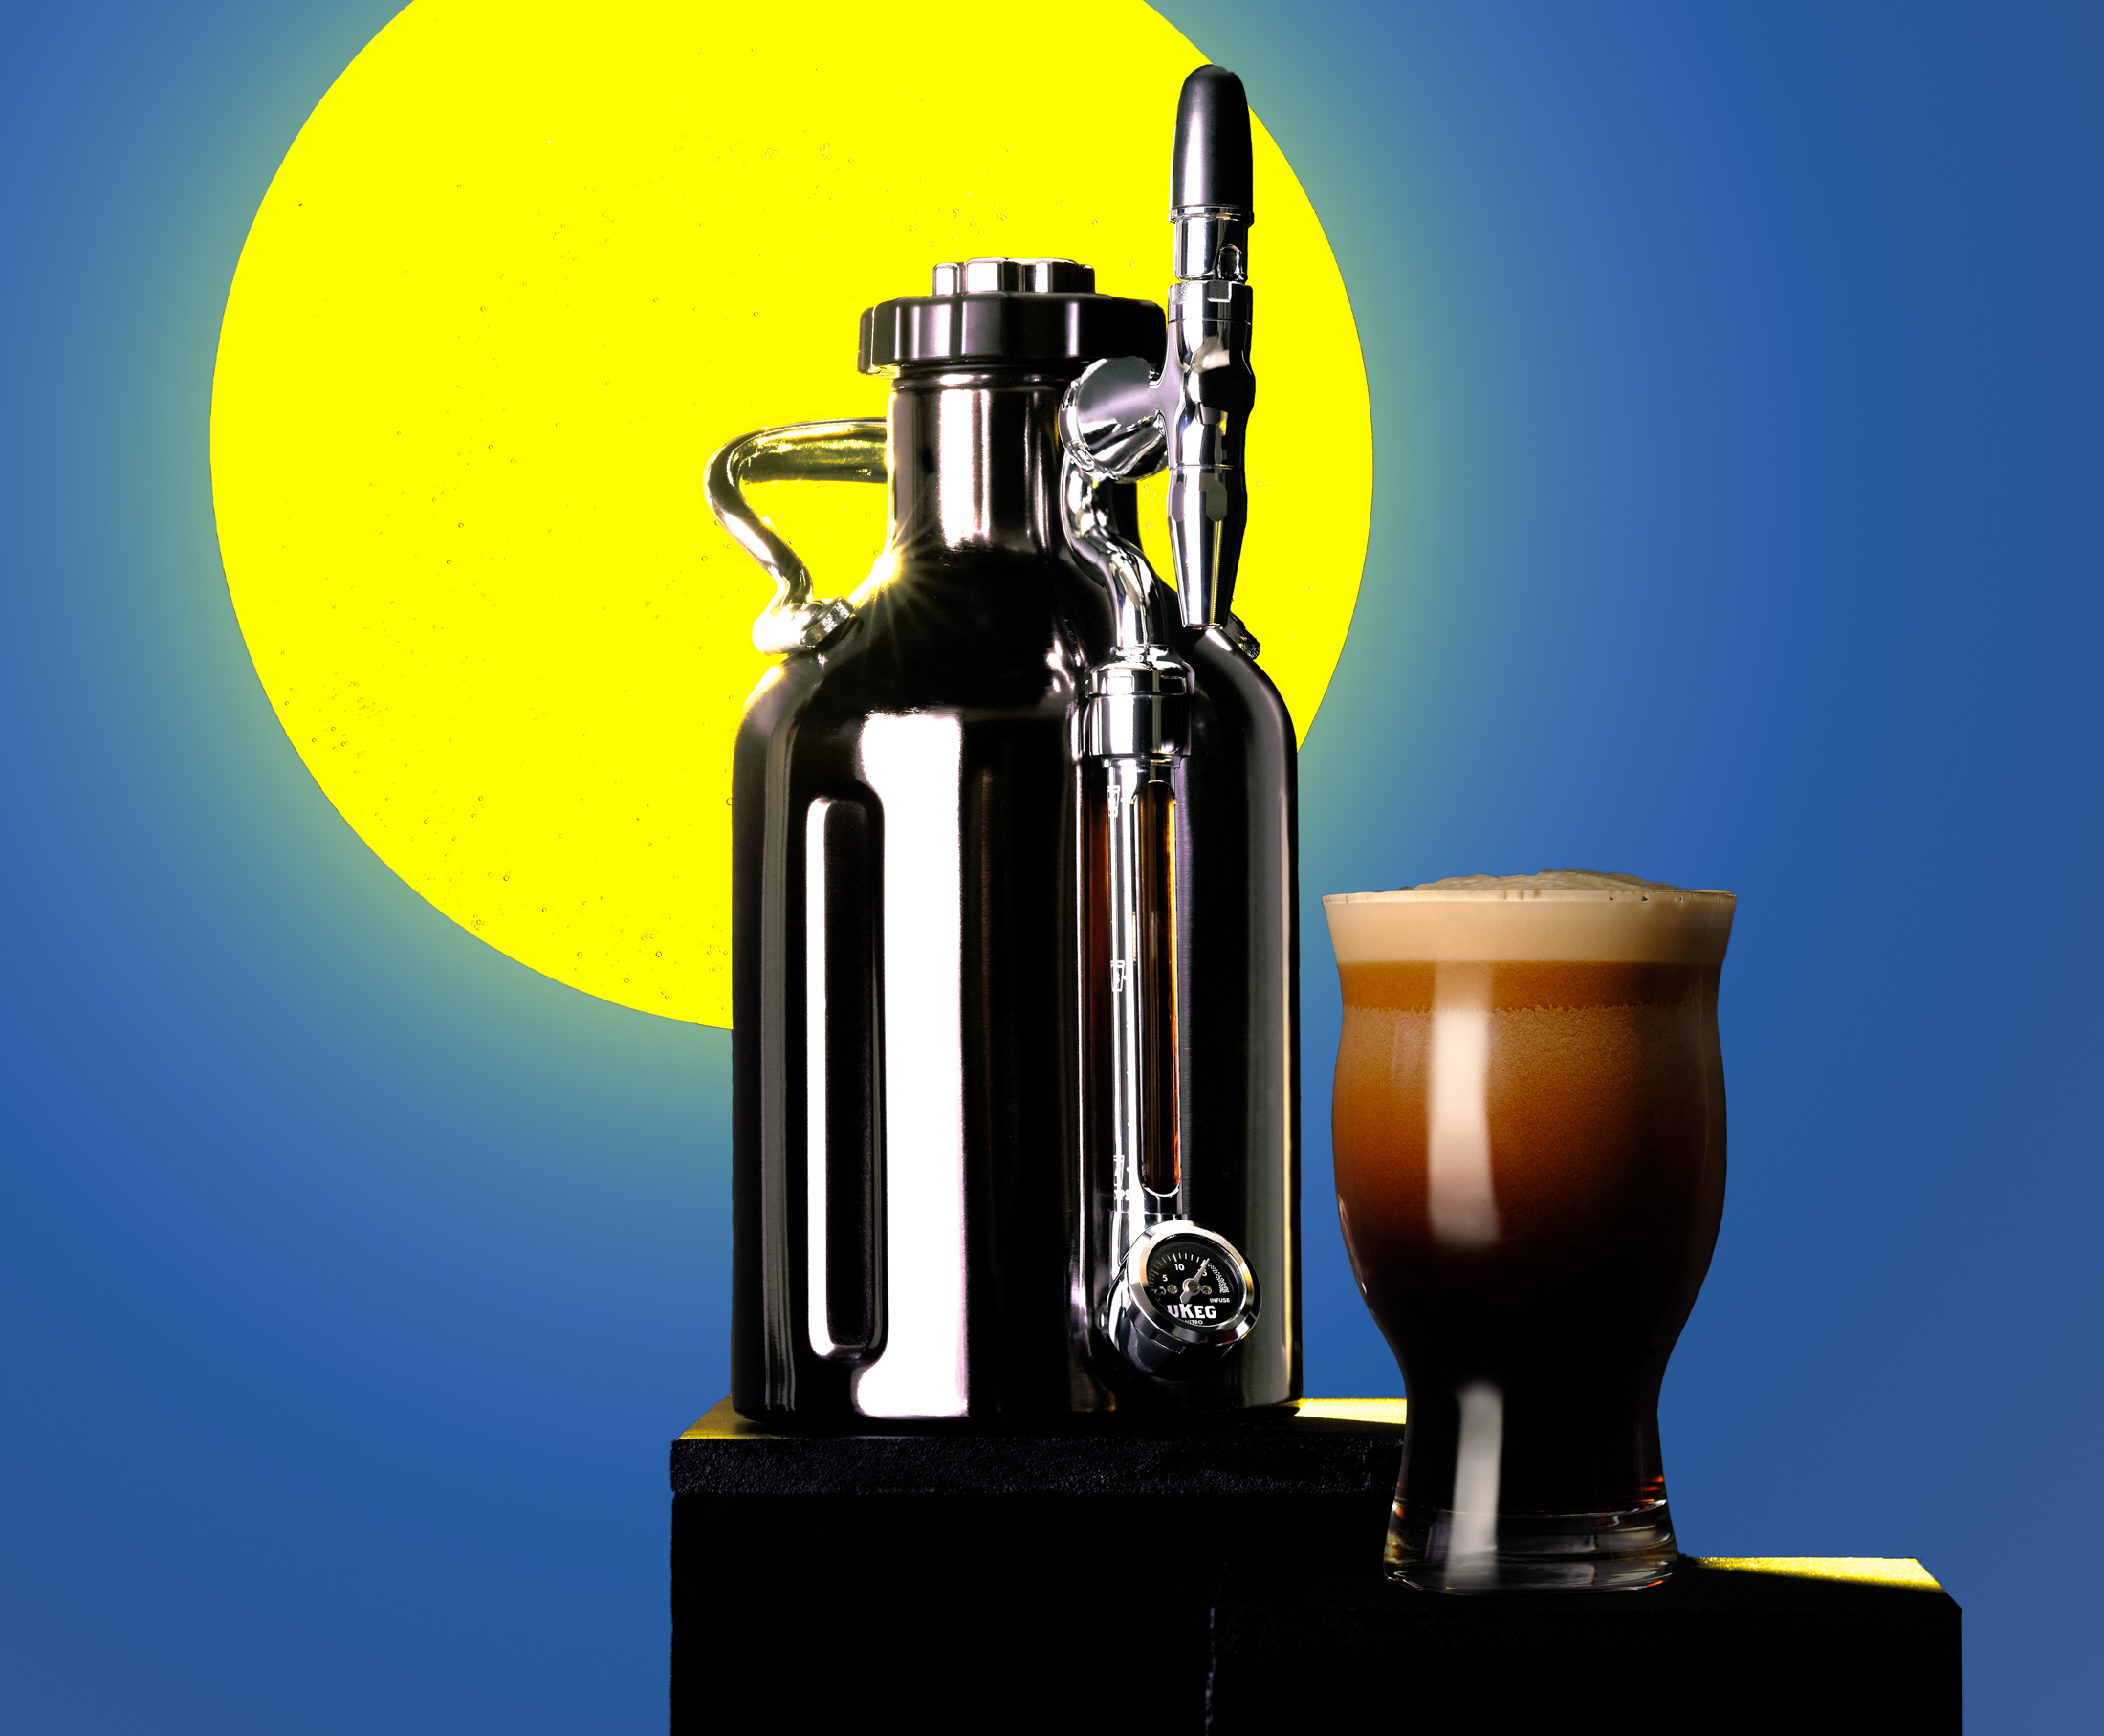 uKeg Nitro Cold Brew Coffee Maker